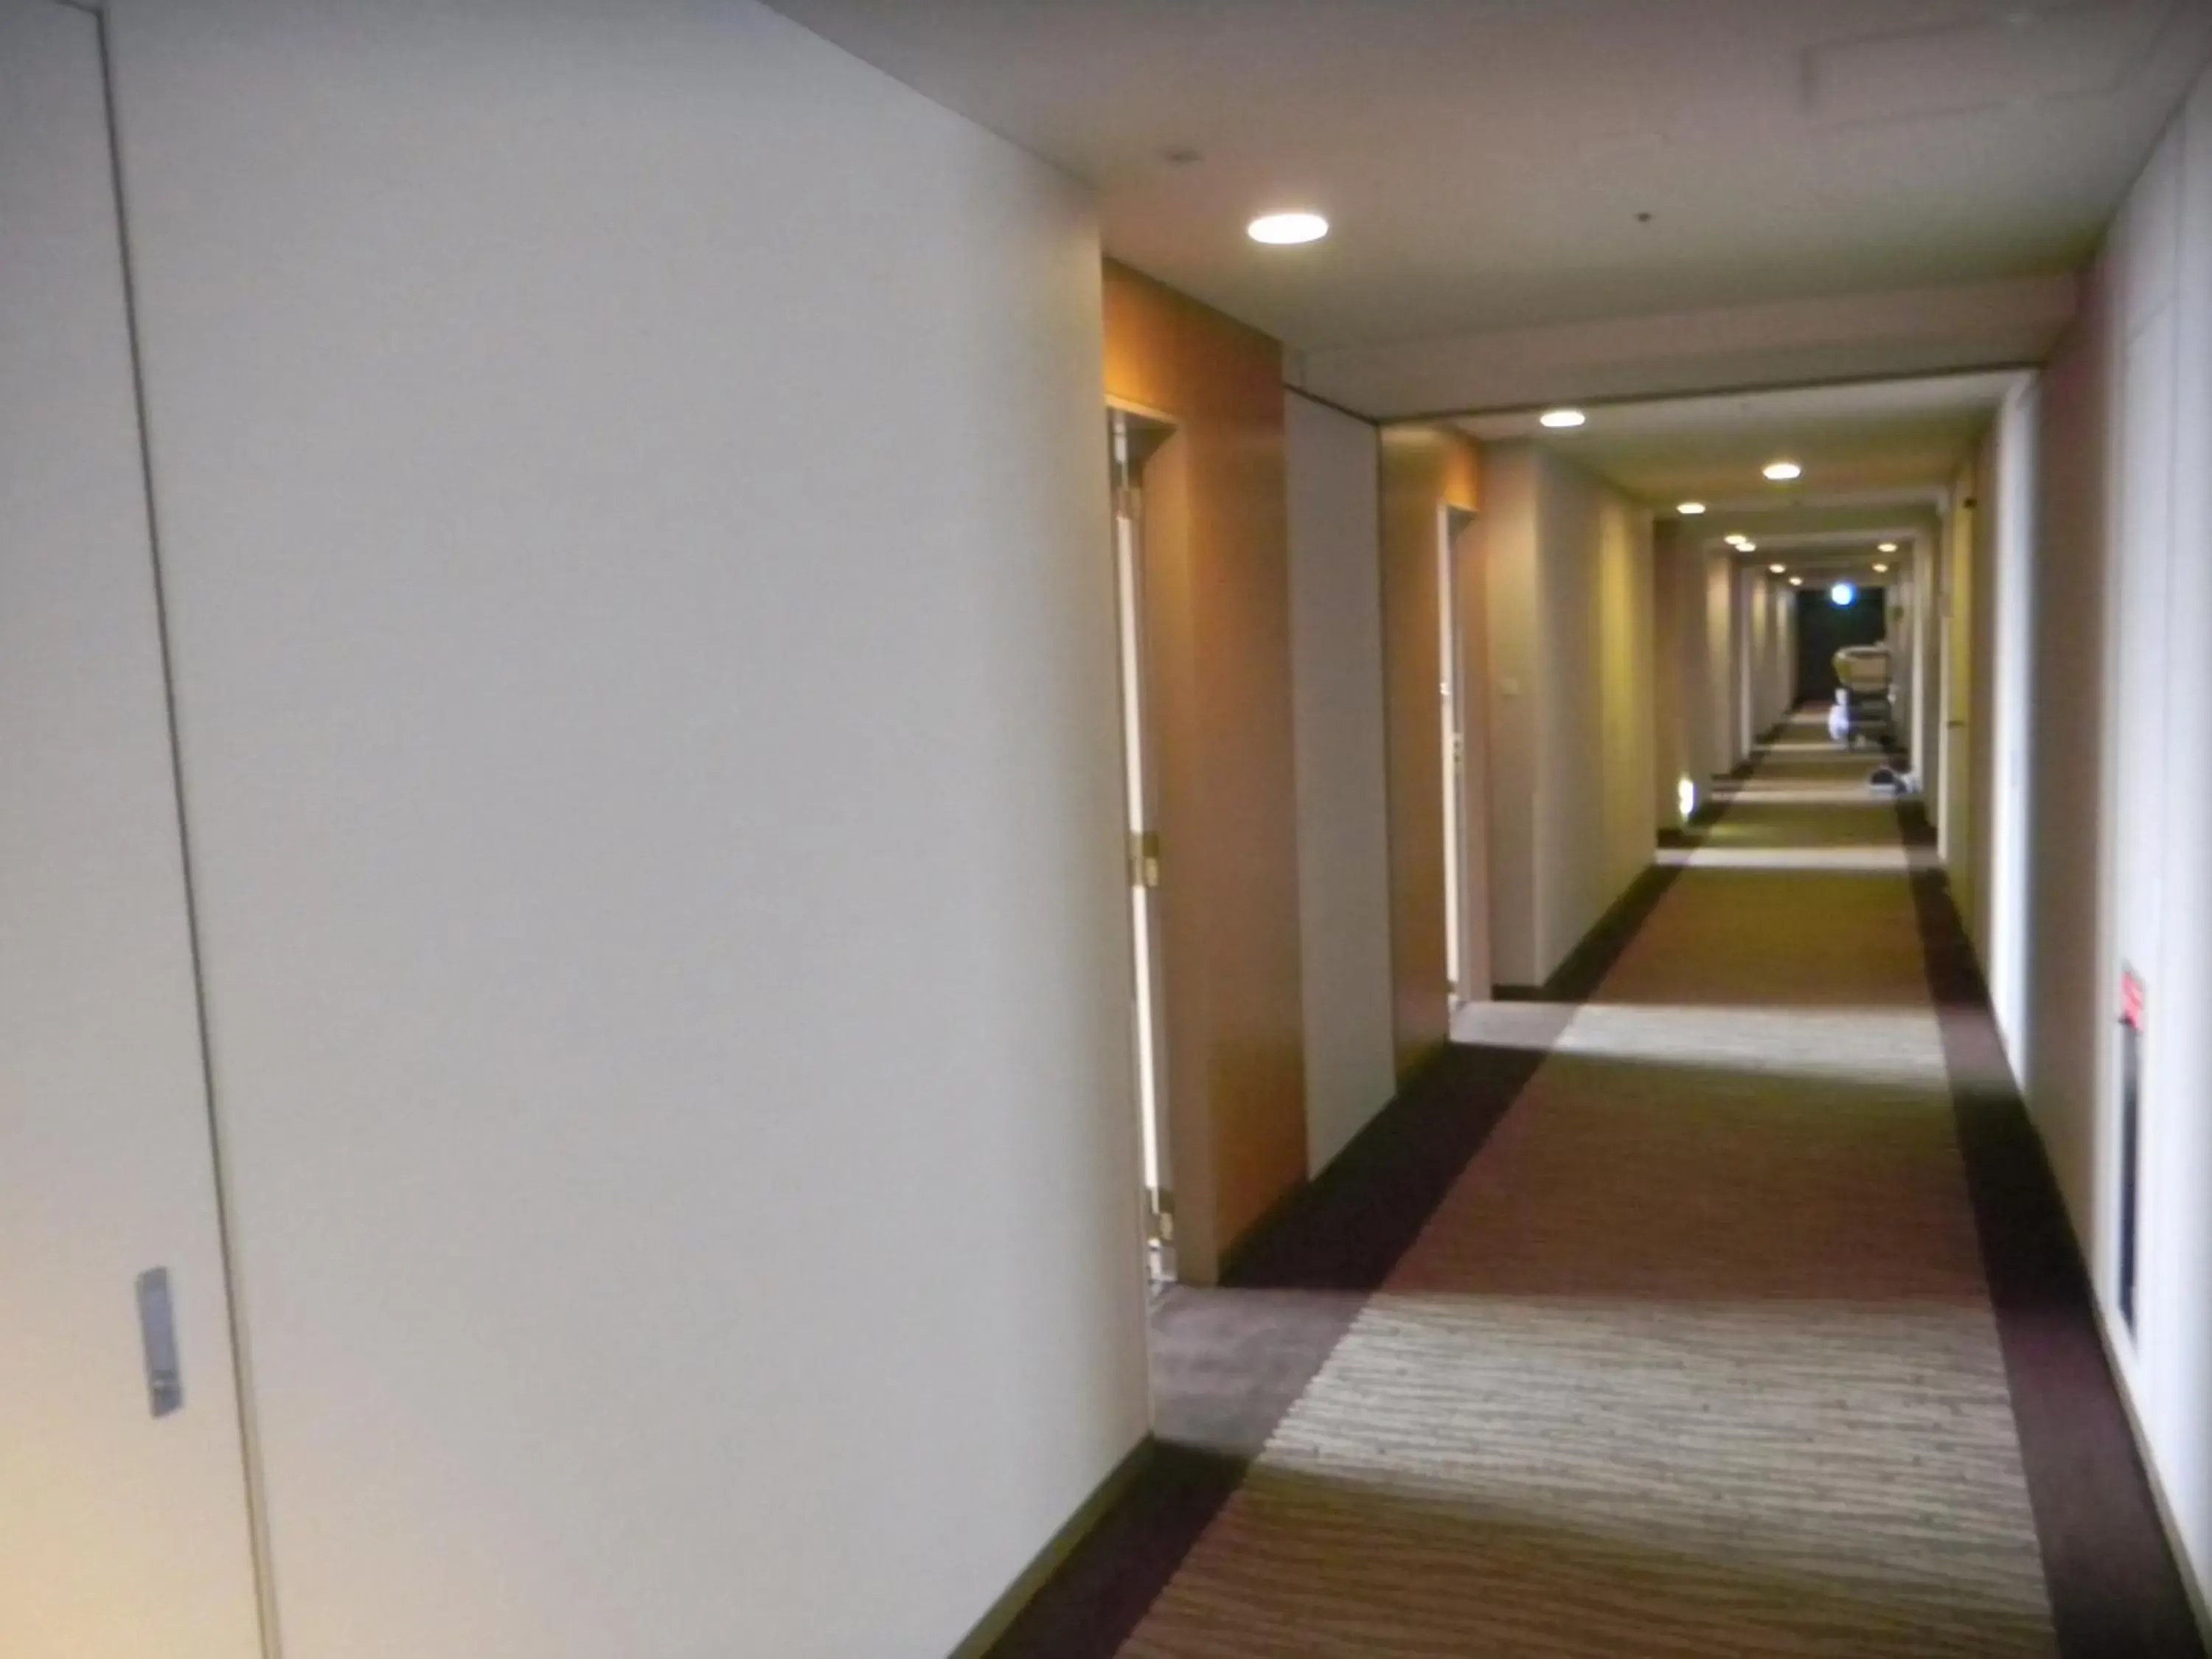 Photo of the whole room in Dai-ichi Hotel Ryogoku